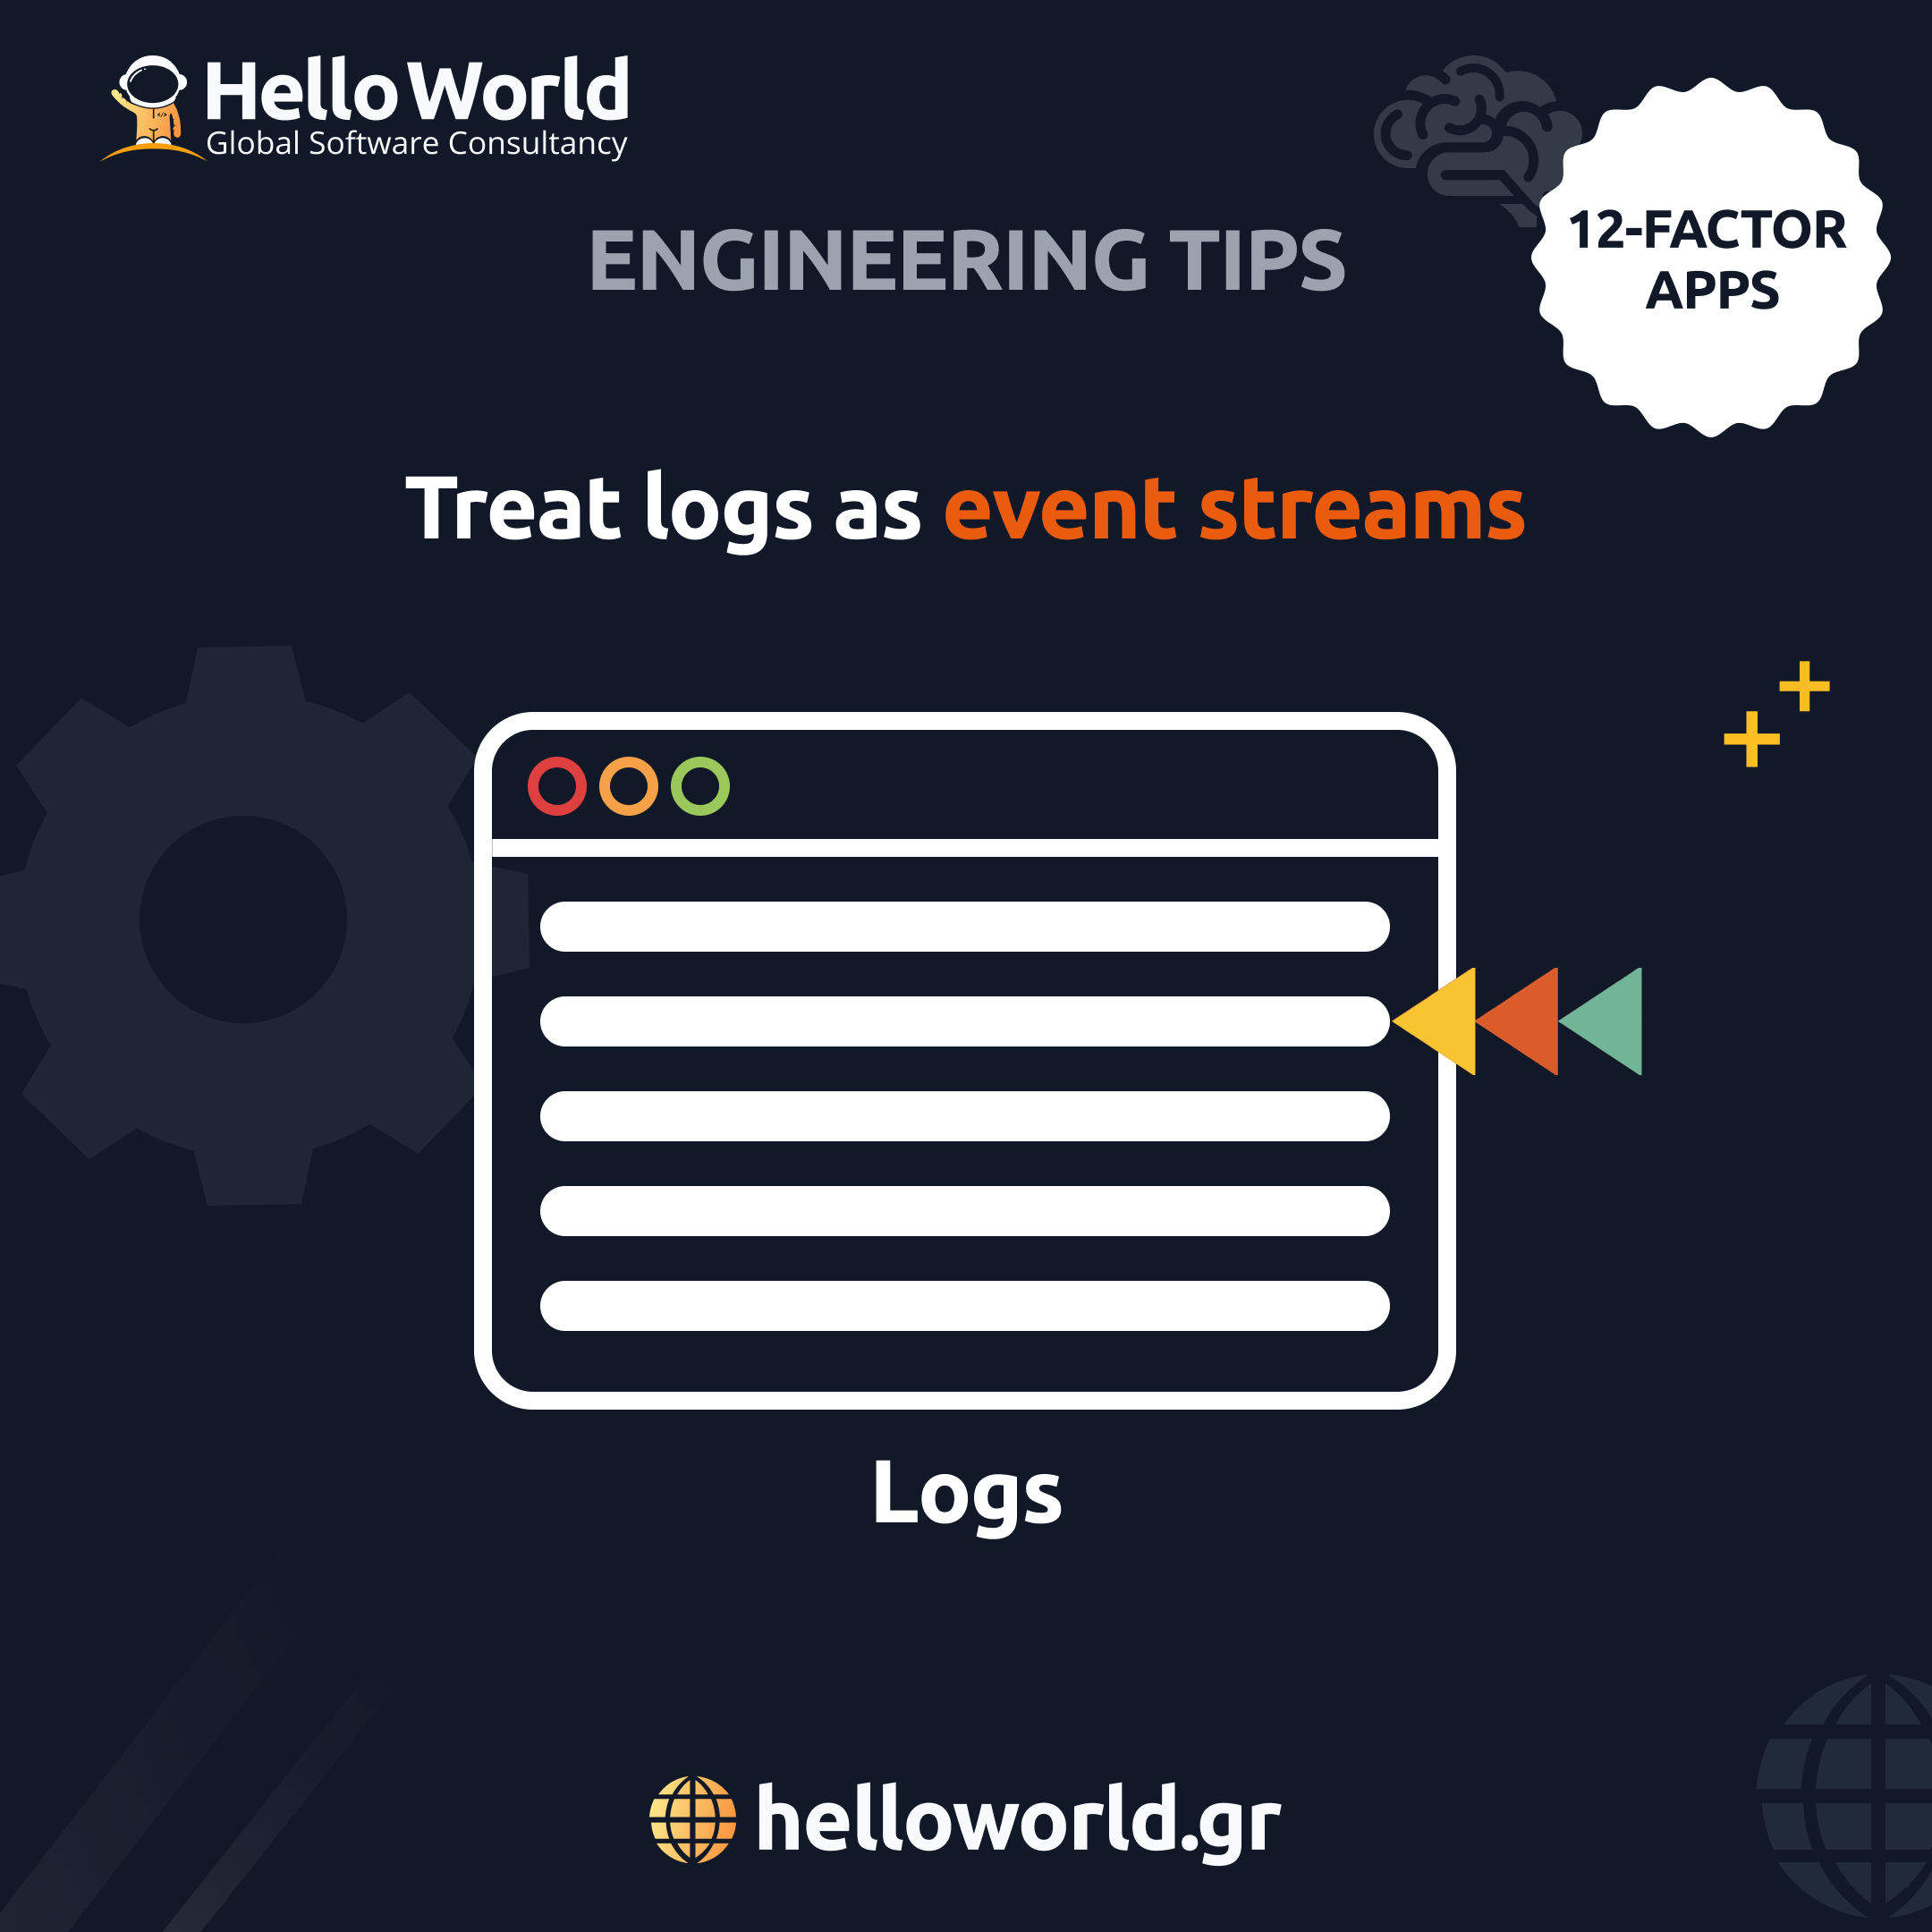 Logs: Treat logs as event streams